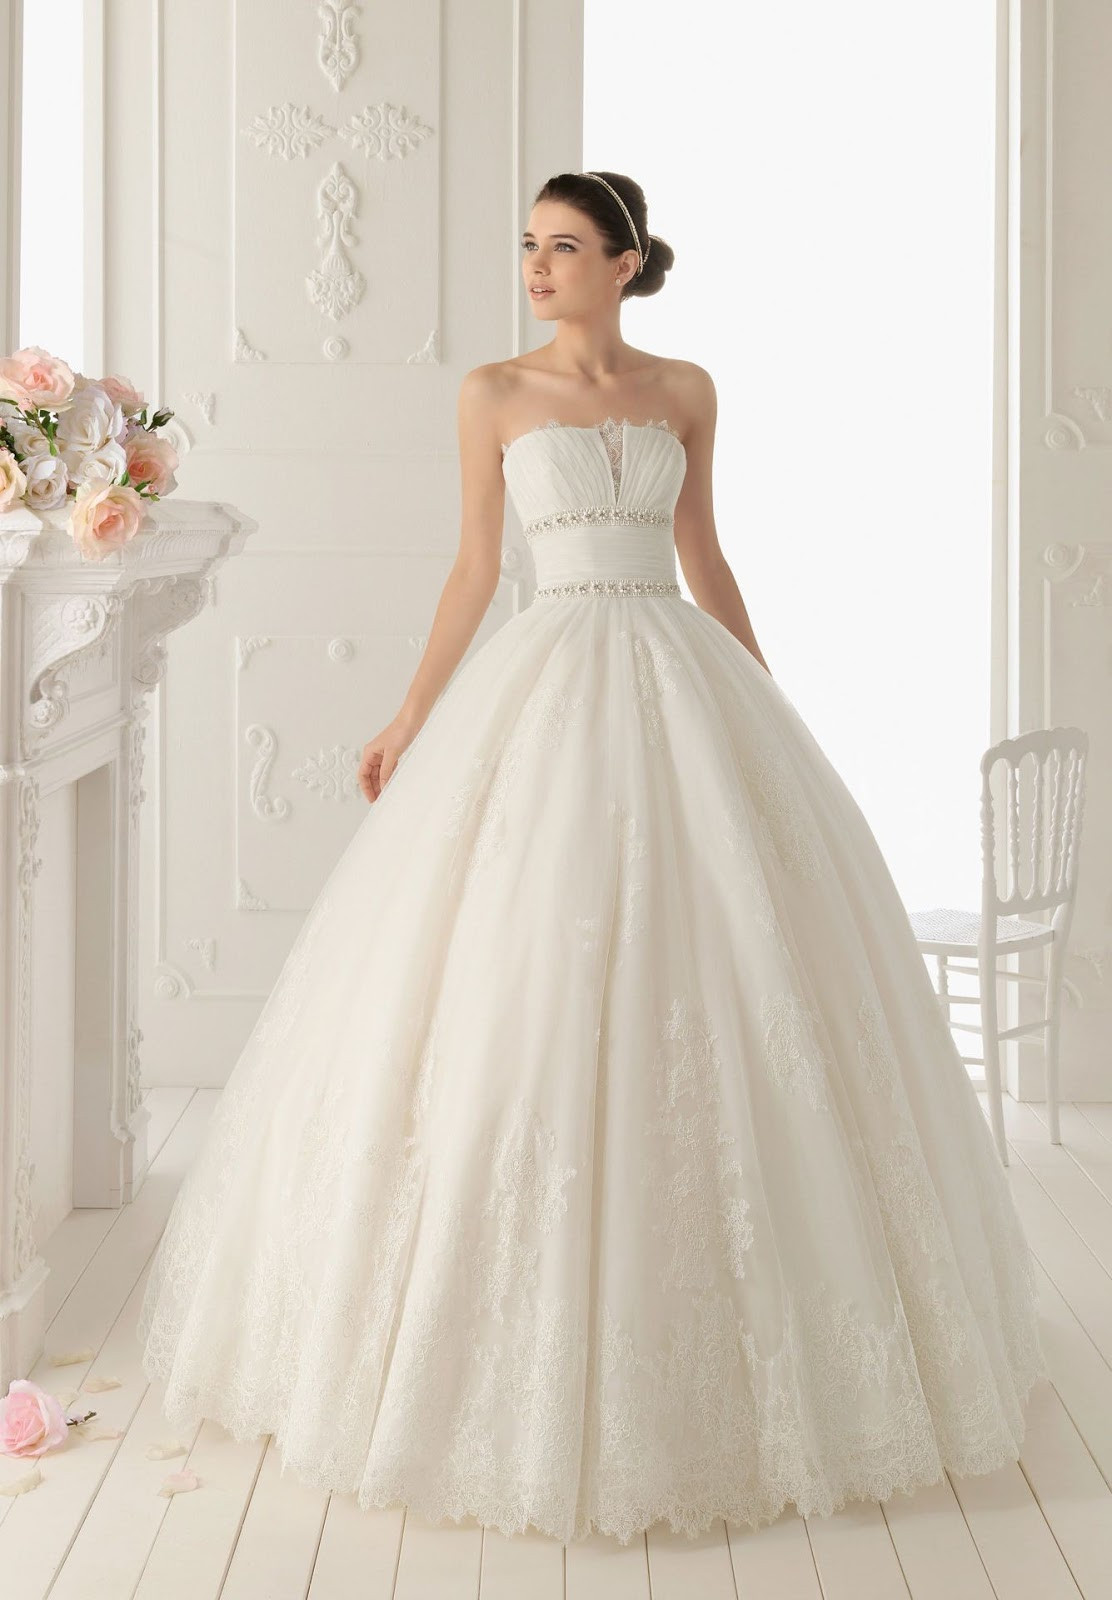 Elegant Wedding Dresses
 WhiteAzalea Ball Gowns Lace Ball Gown Wedding Dress